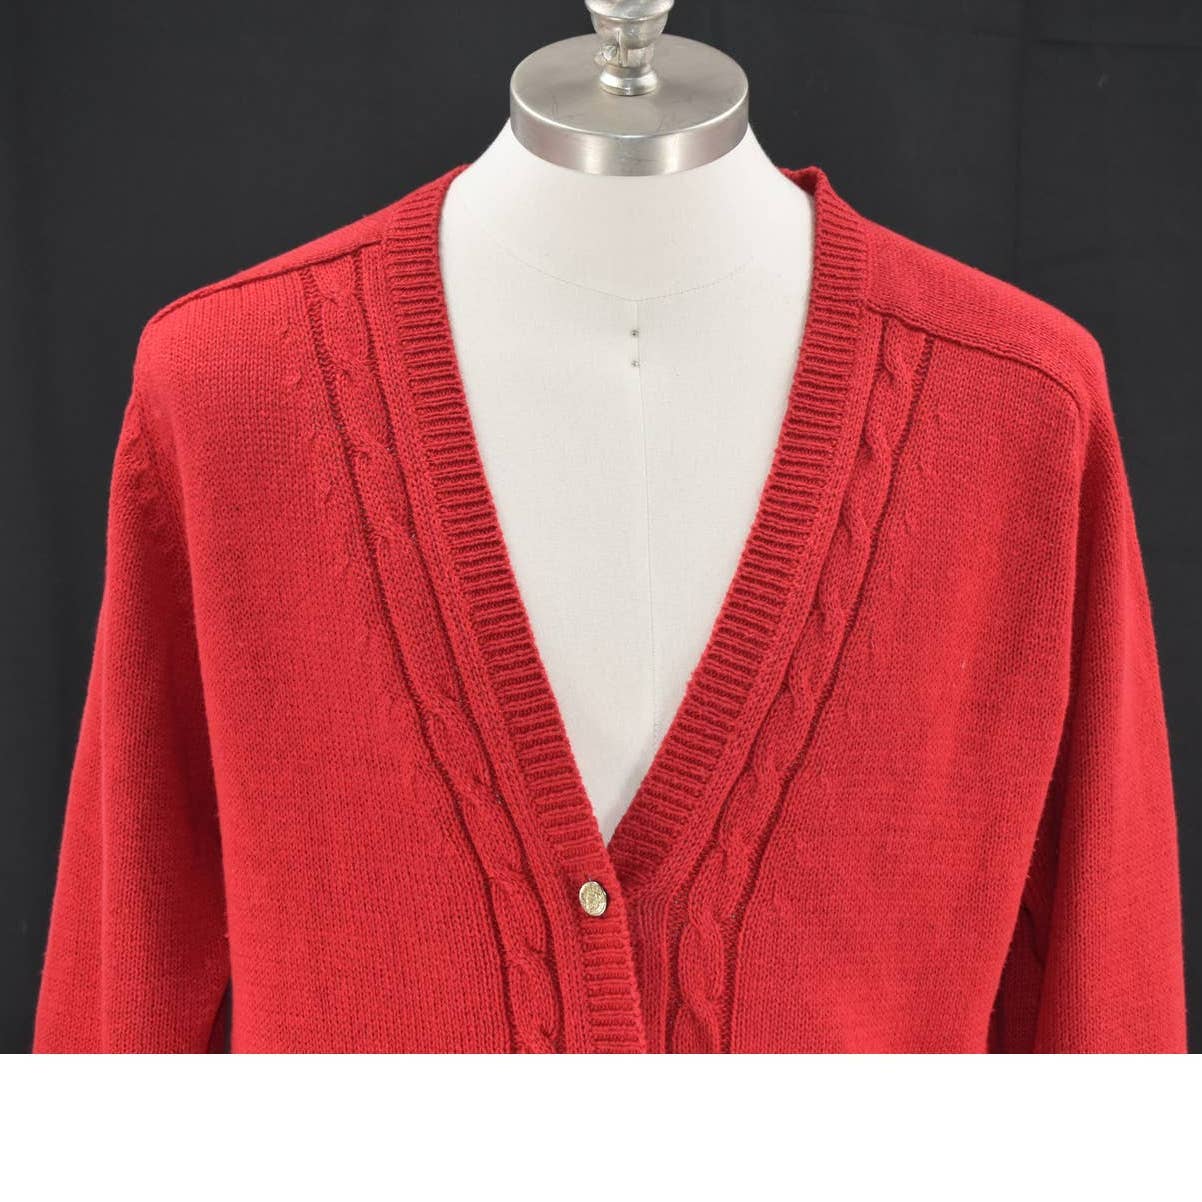 Vintage Pierre Cardin Red Knit Cardigan Sweater - M